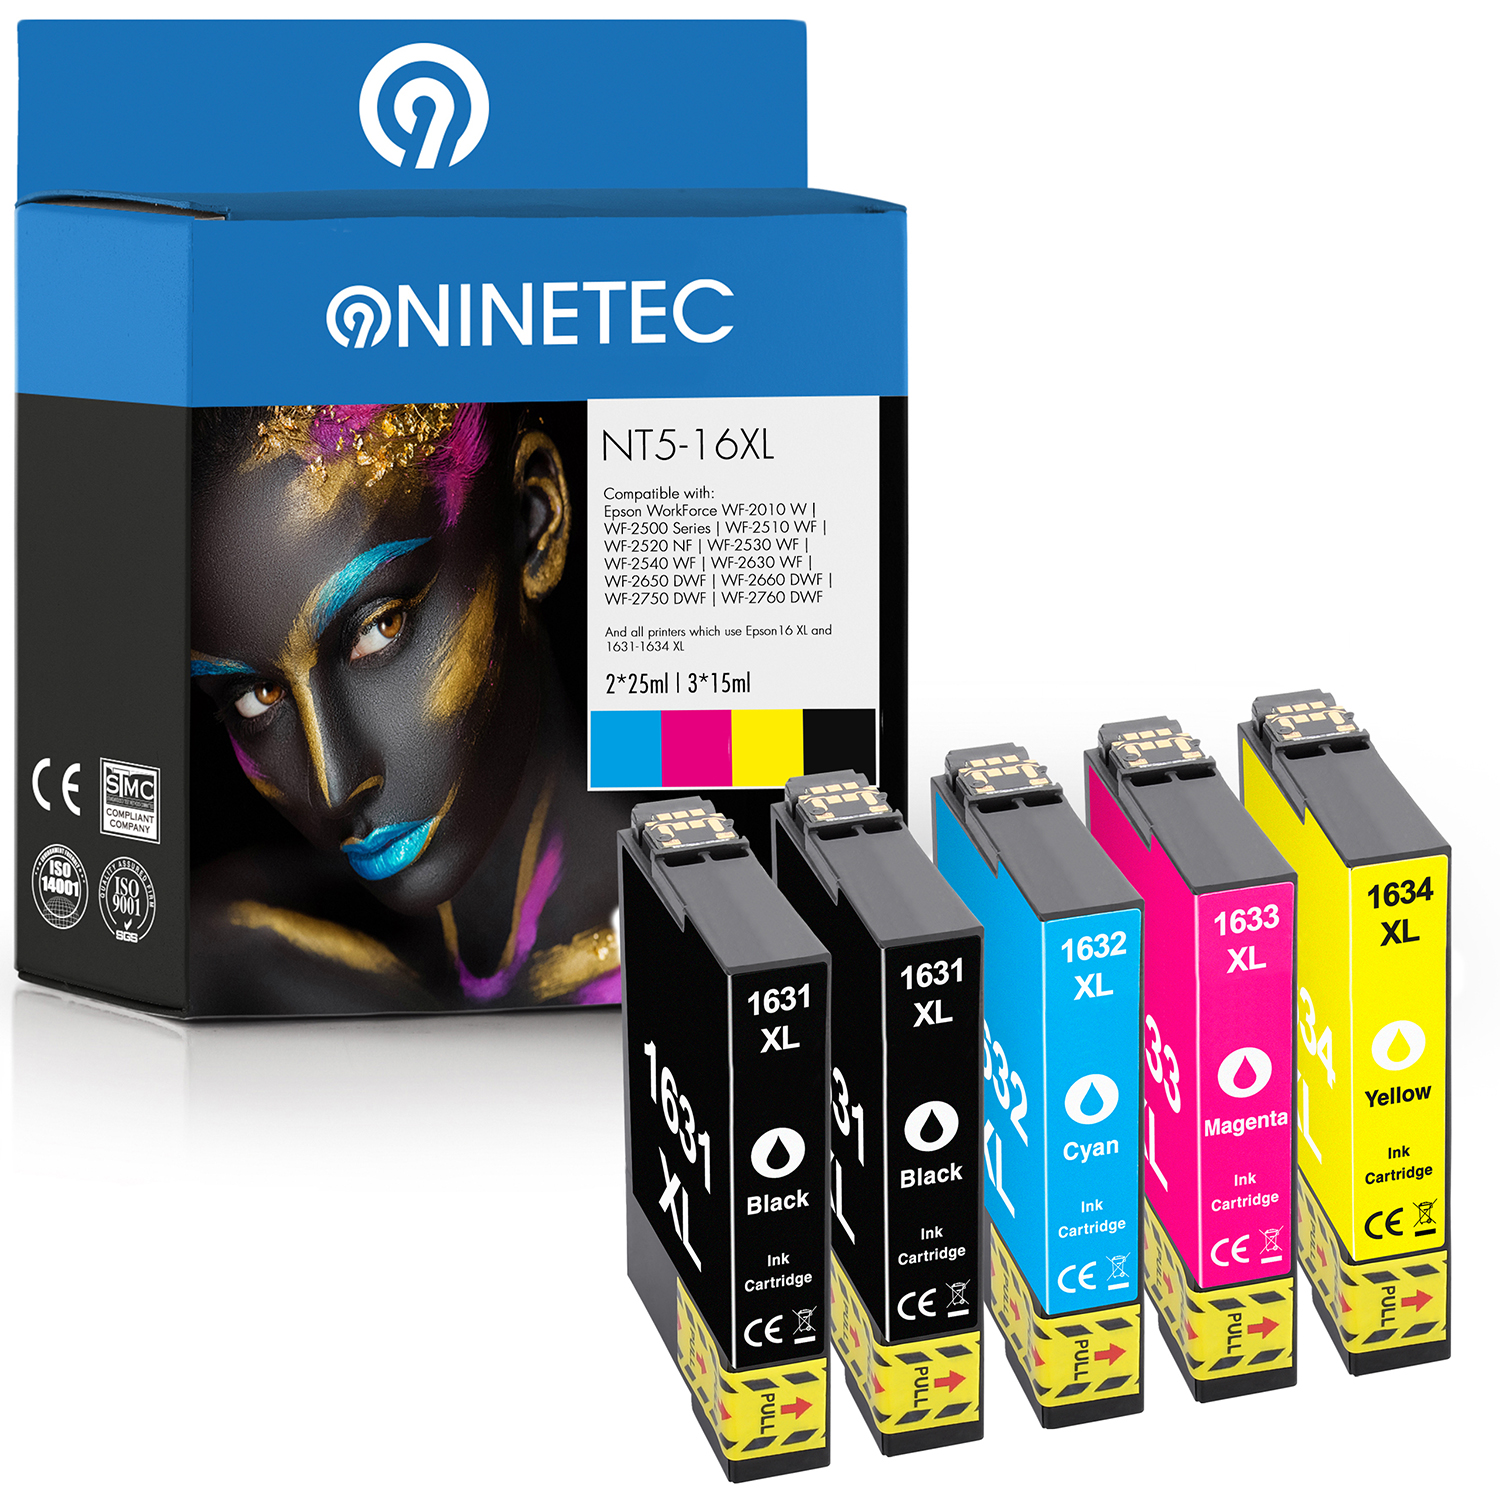 16364012) 5er (C magenta, yellow T1631-T1634 black, T cyan, 13 Epson ersetzt Tintenpatronen NINETEC Set